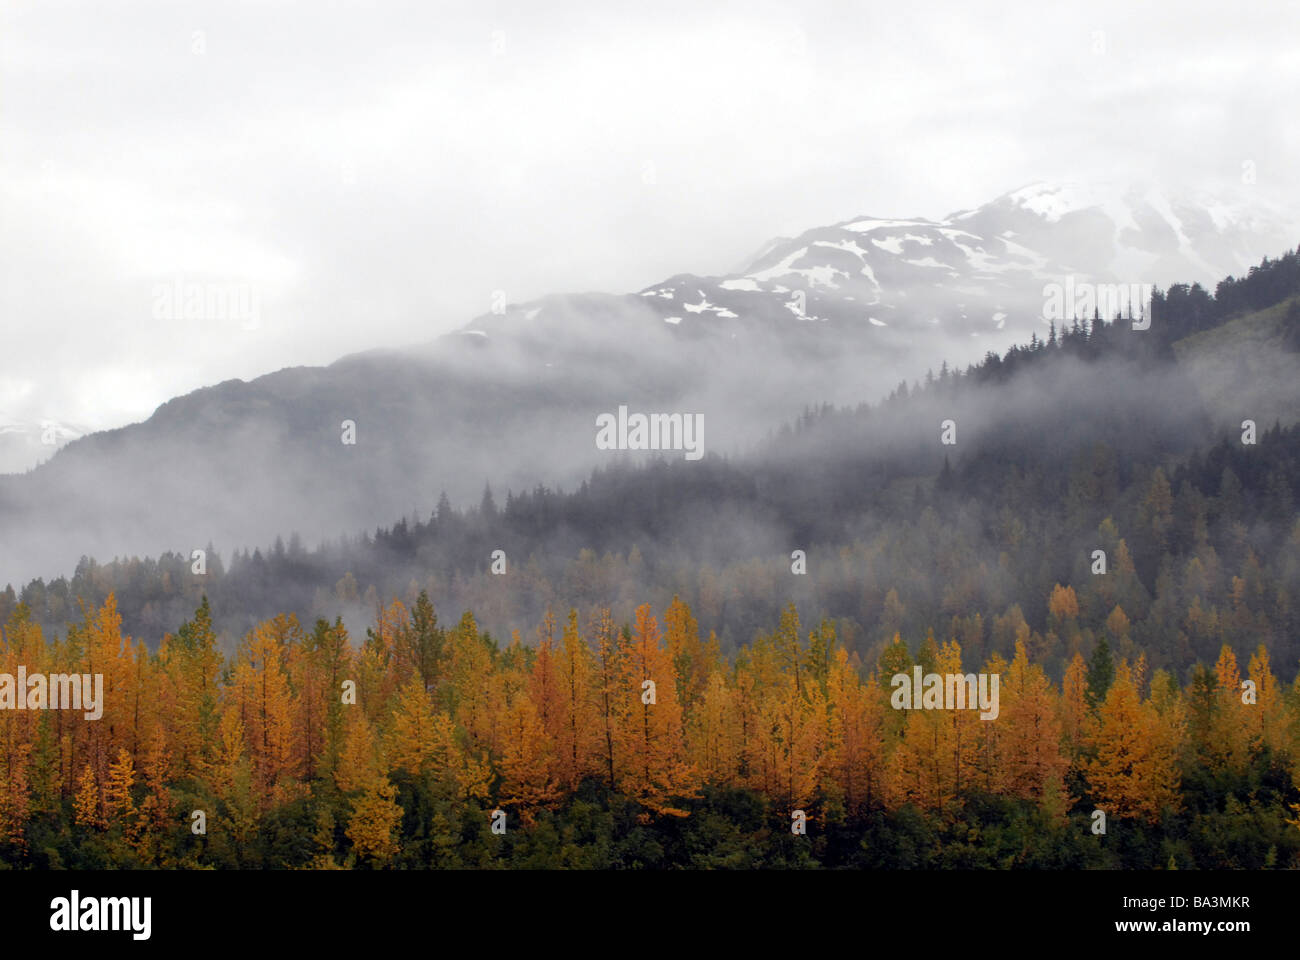 Fall foliage against misty mountains on Alaska's Kenai Peninsula. Stock Photo